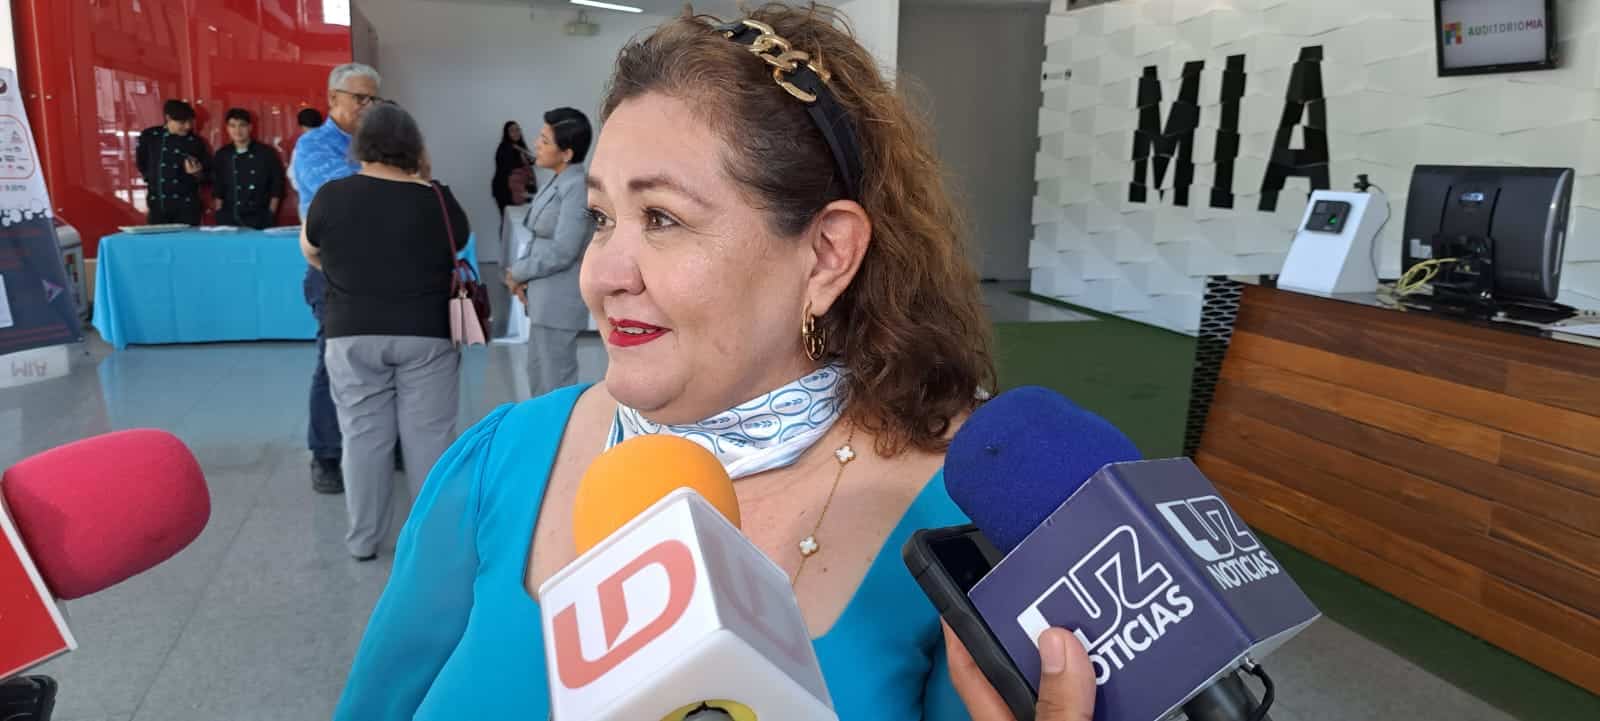 Laura Guzmán Torróntegui